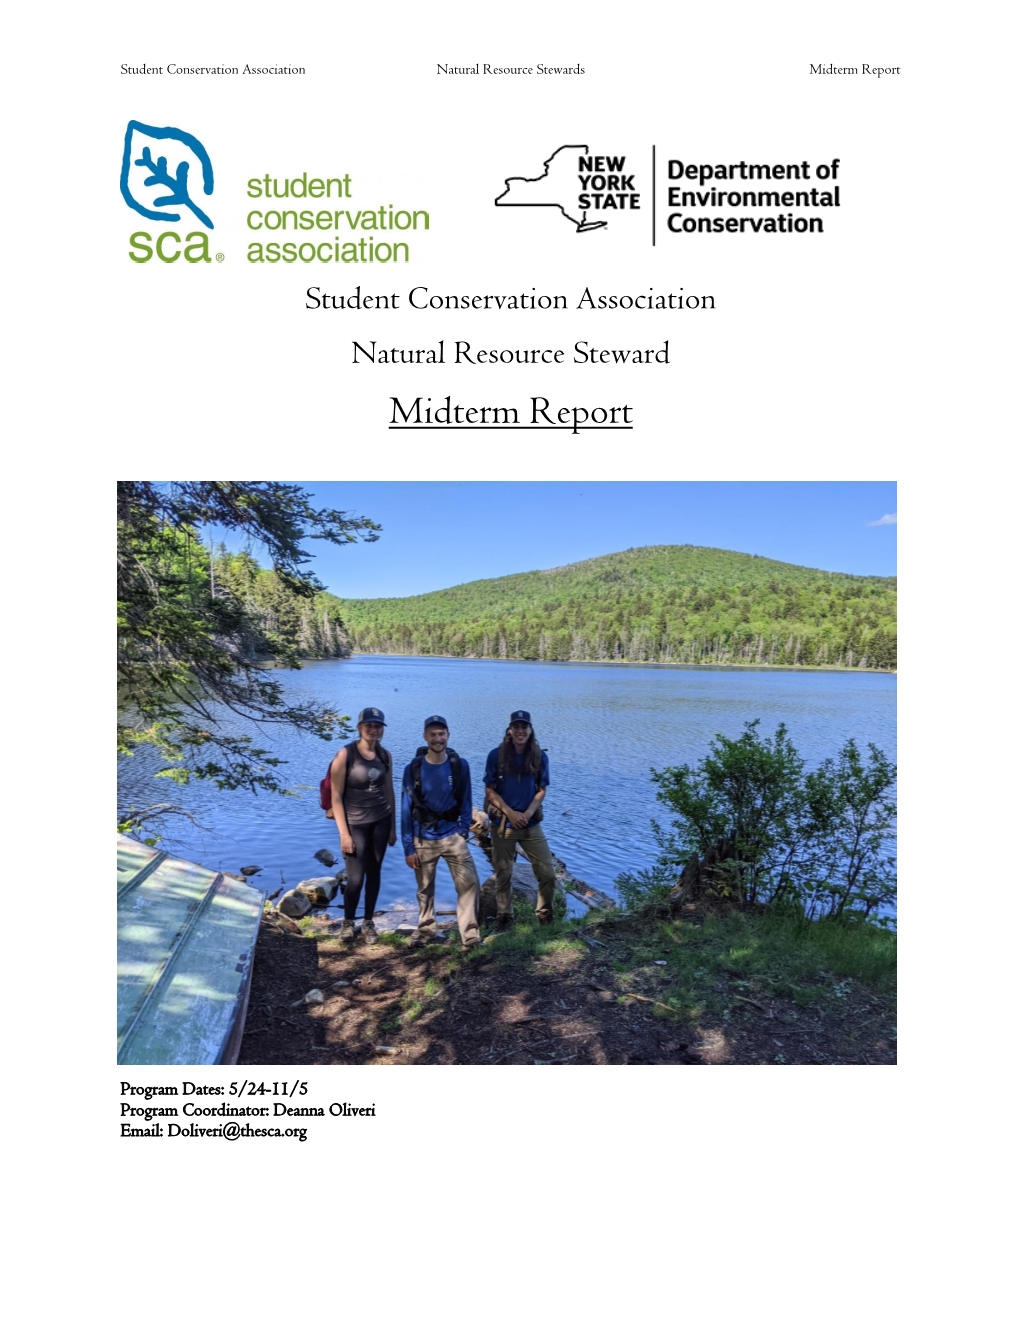 Student Conservation Association Natural Resource Stewards Midterm Report